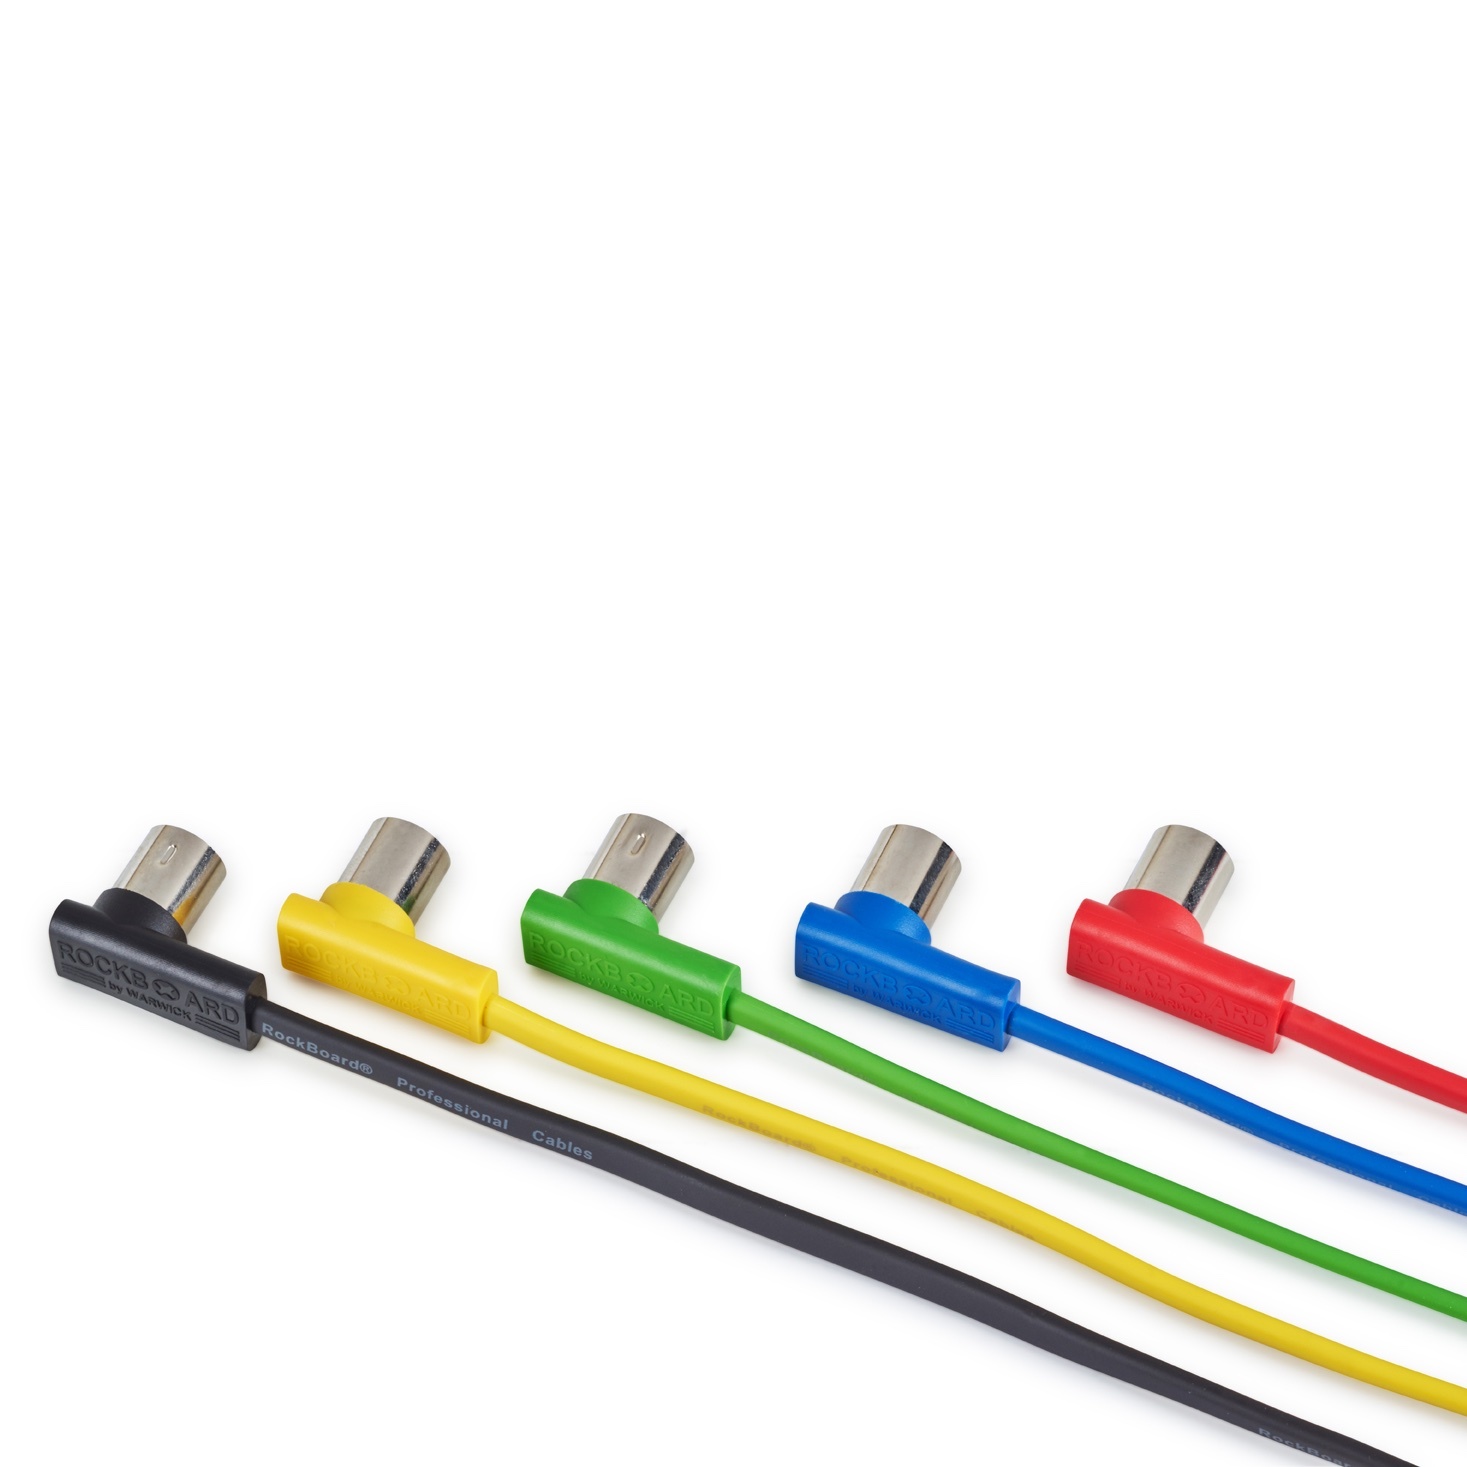 Rockboard Flat MIDI Cable - 30 cm (11 13/16"), Blue, Angled Plugs